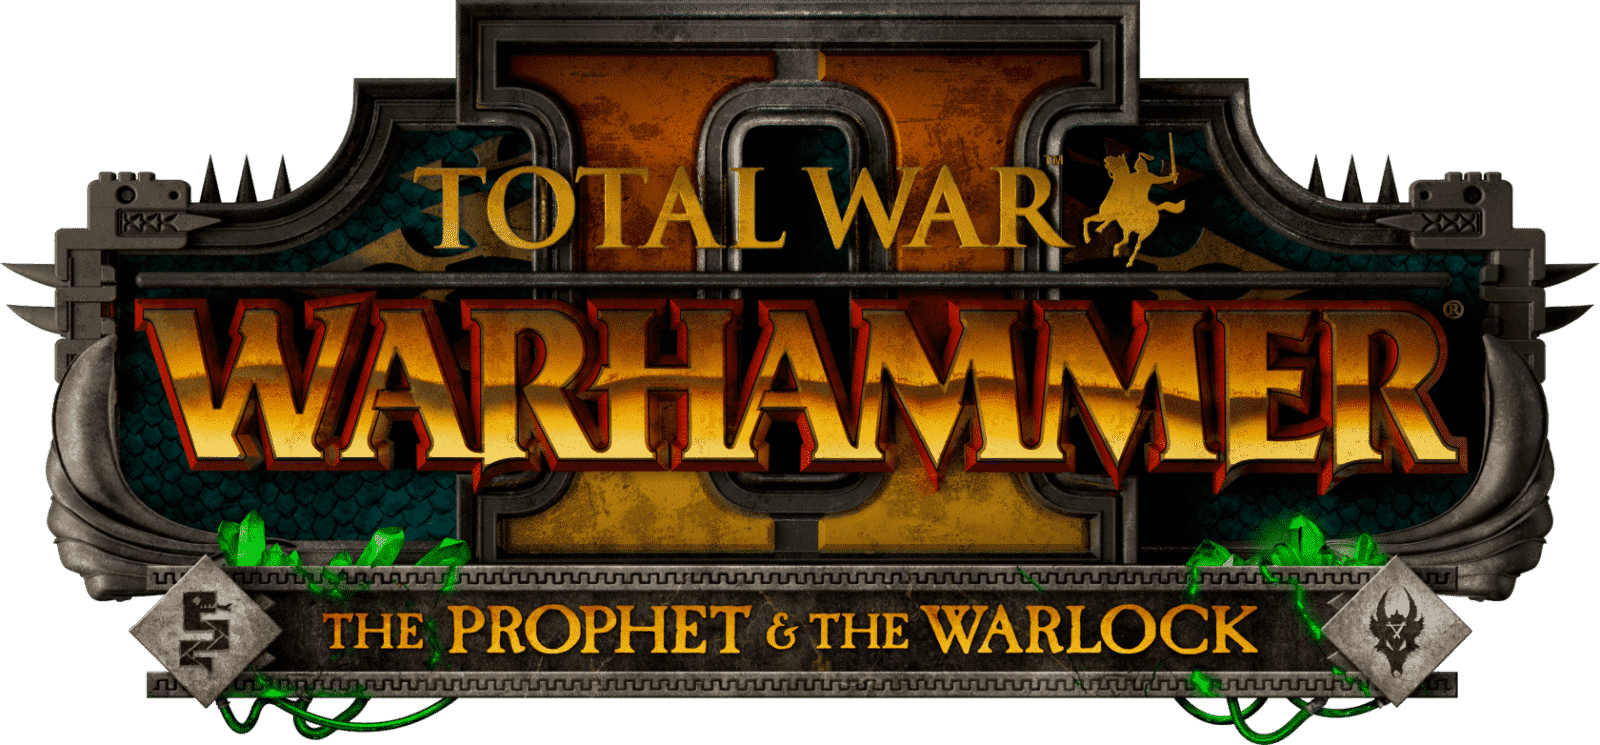 Warhammer II Prophet Warlock